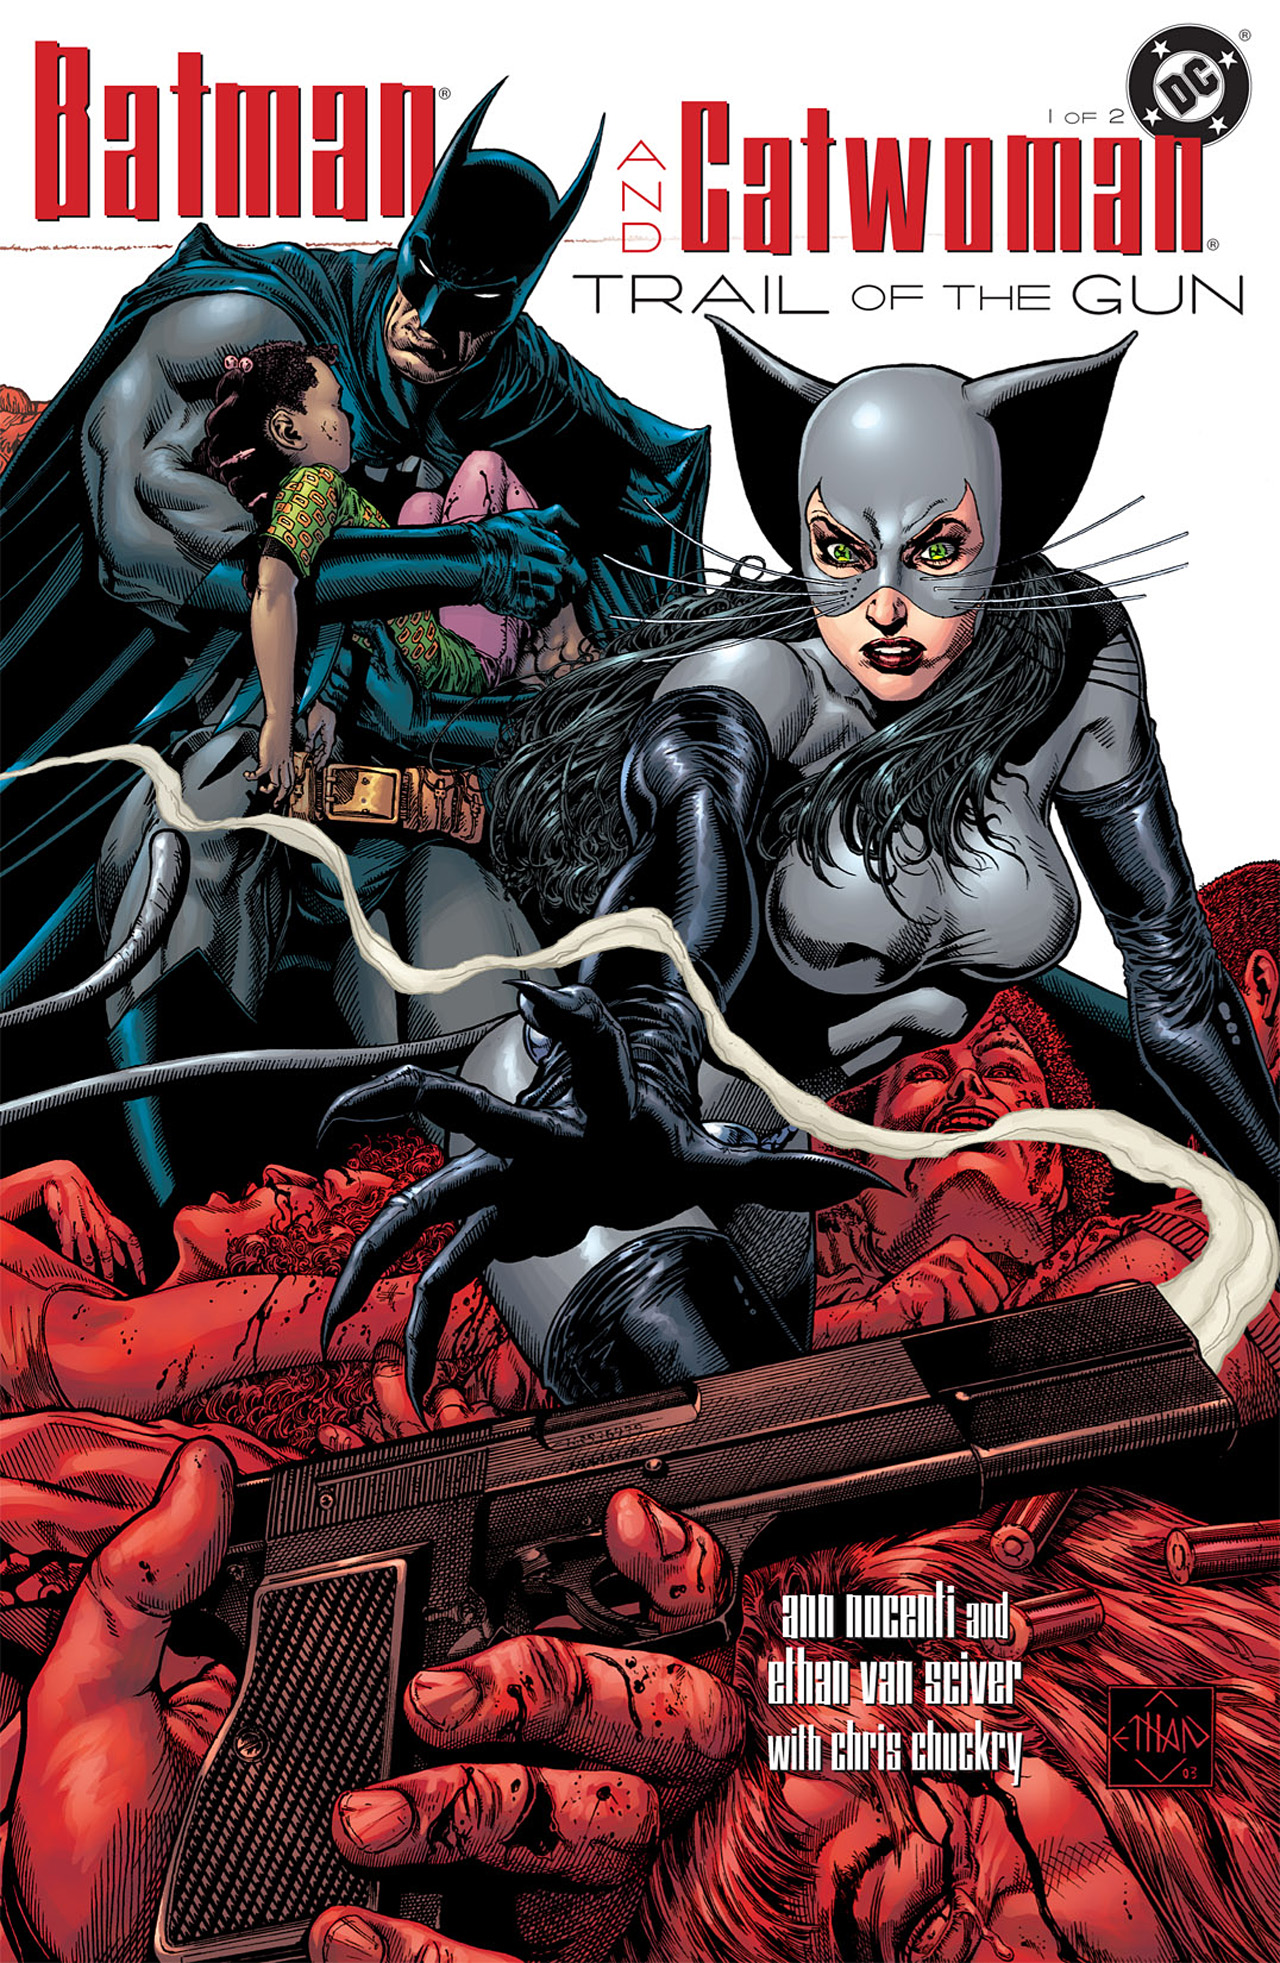 High Resolution Wallpaper | Batman Catwoman: Trail Of The Gun  1280x1963 px